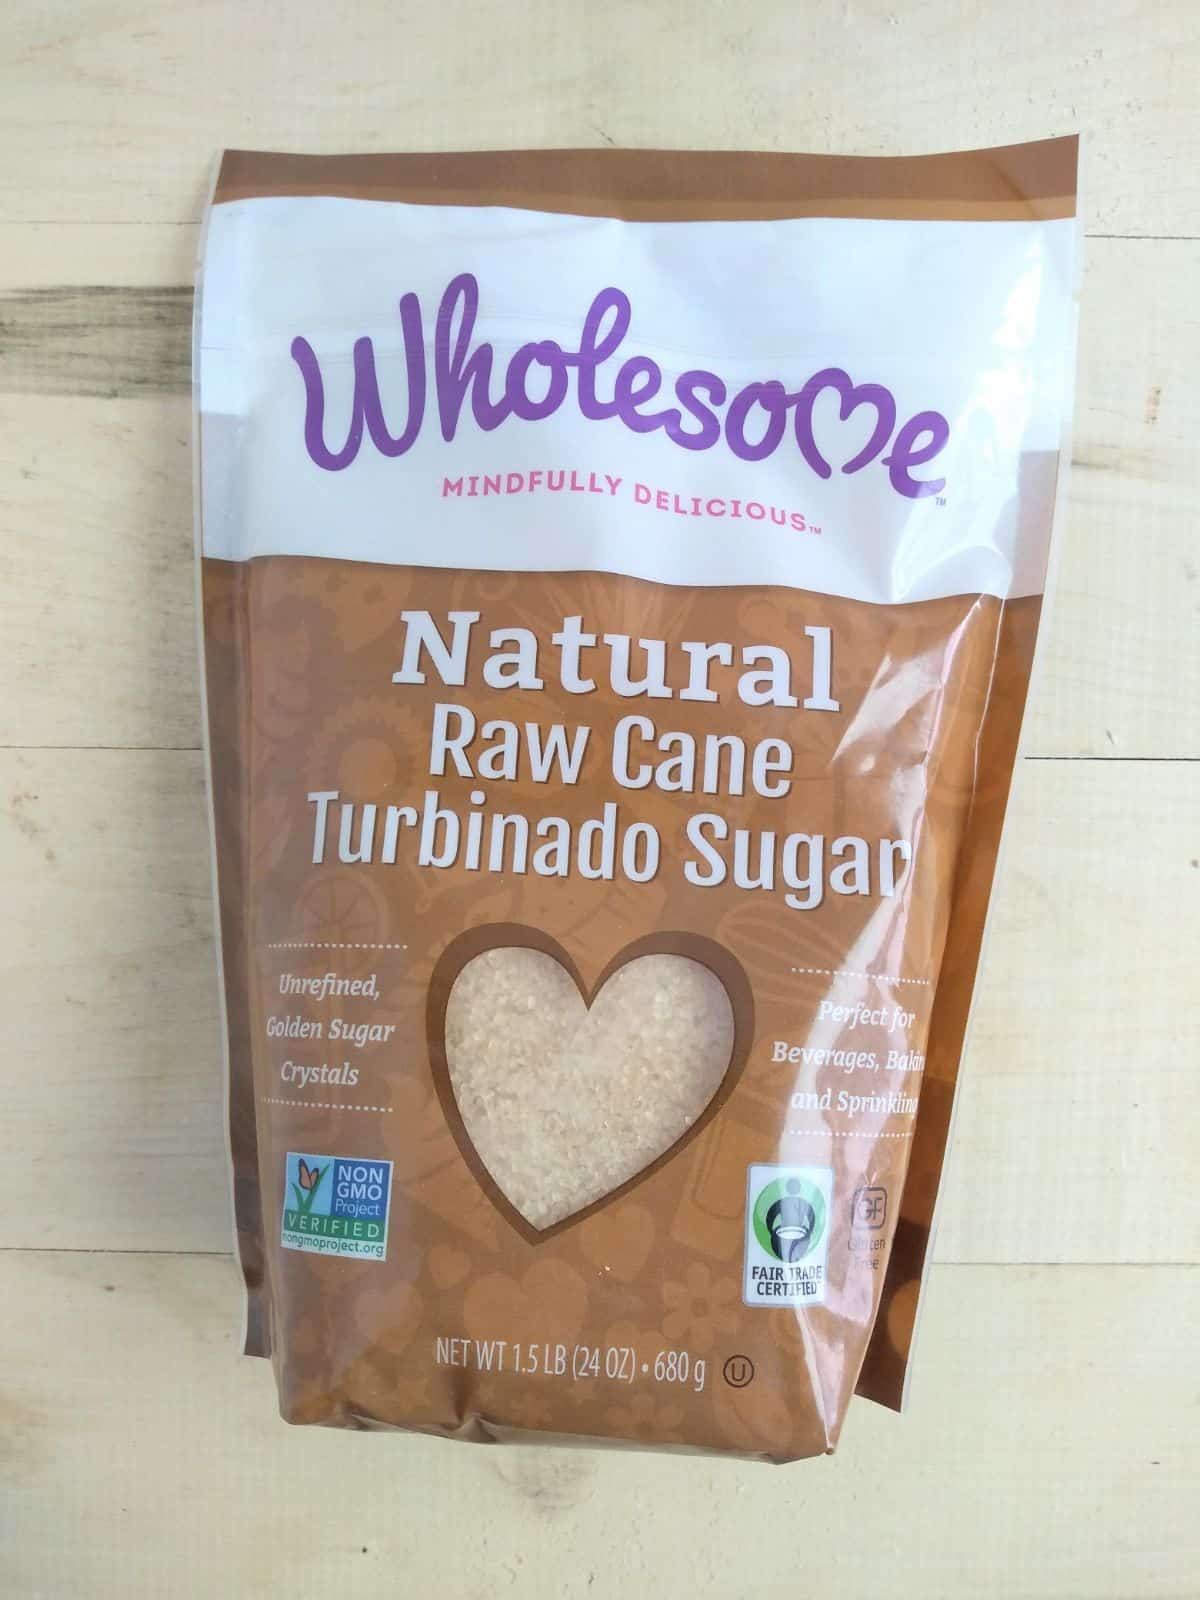 A bag of Wholesome Natural Raw Cane Turbinado Sugar sitting on a wood board.